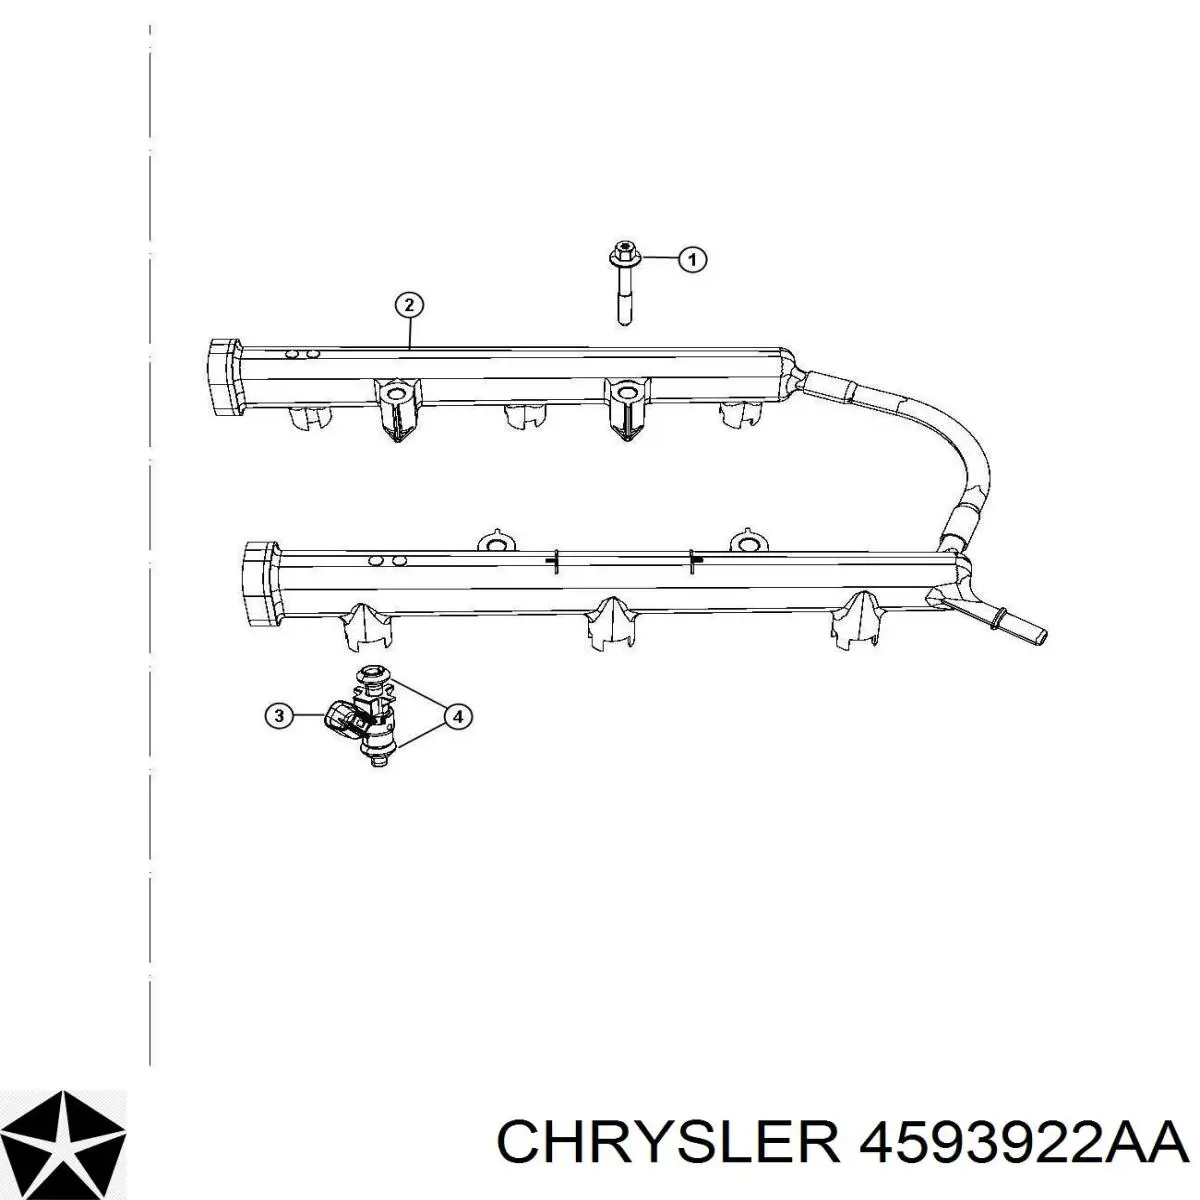 4593922AA Chrysler